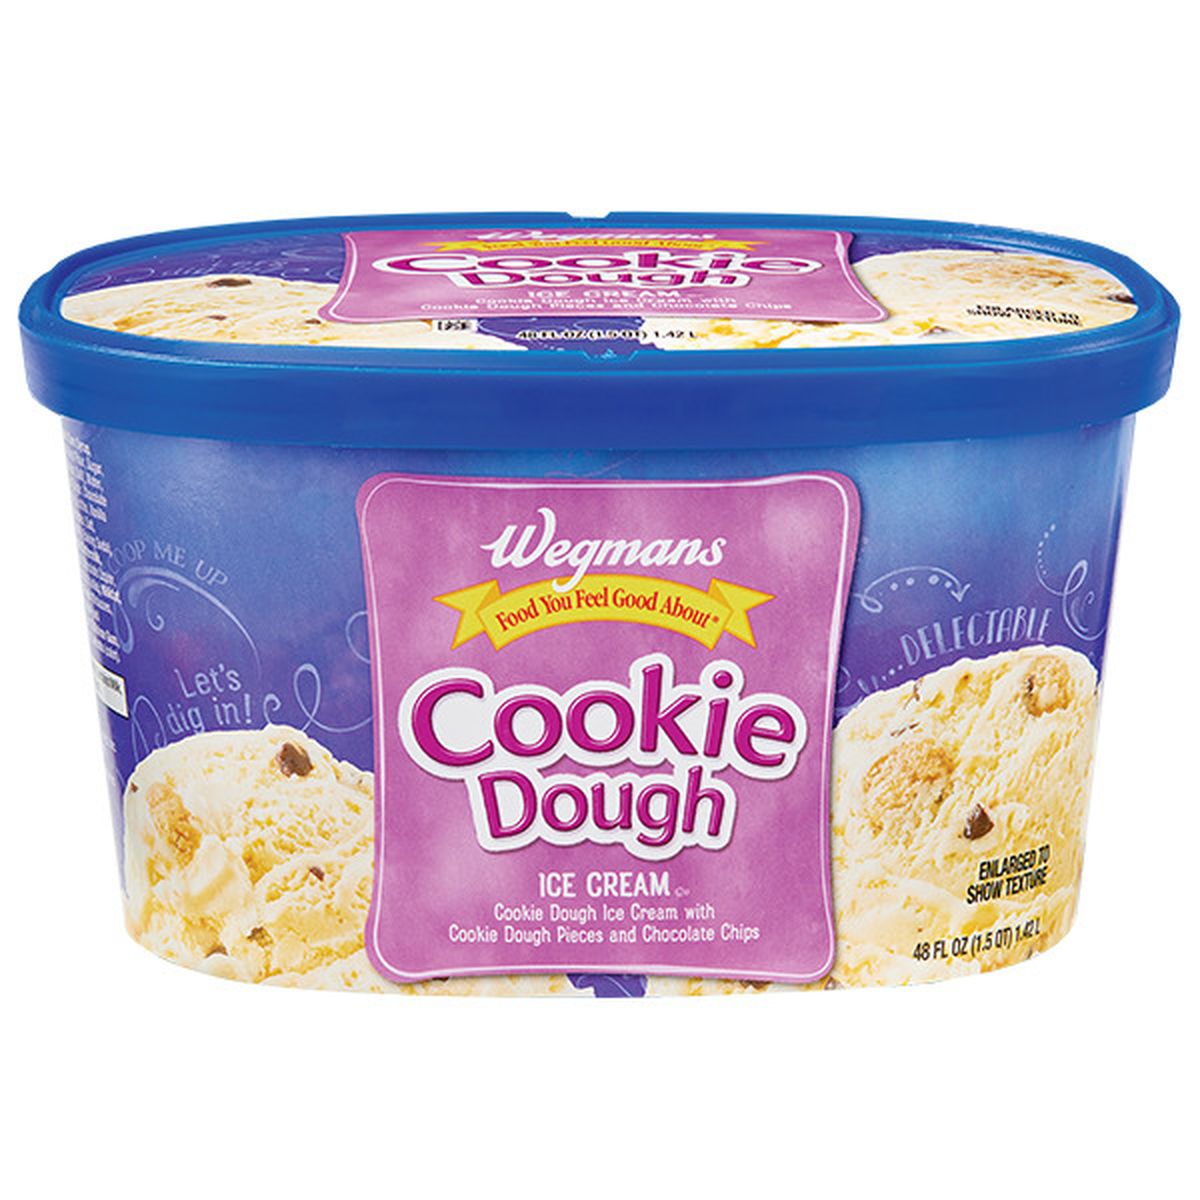 Calories in Wegmans Cookie Dough Ice Cream